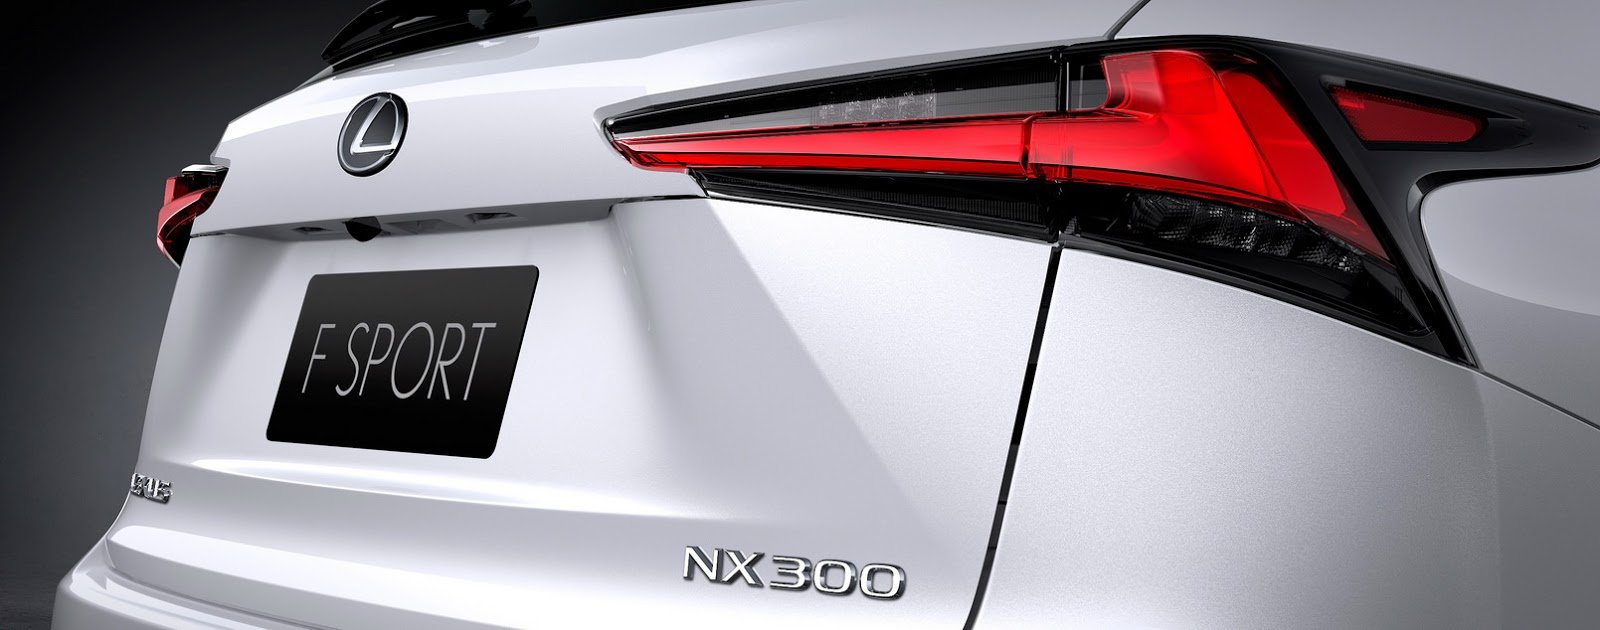 2018 Lexus NX300